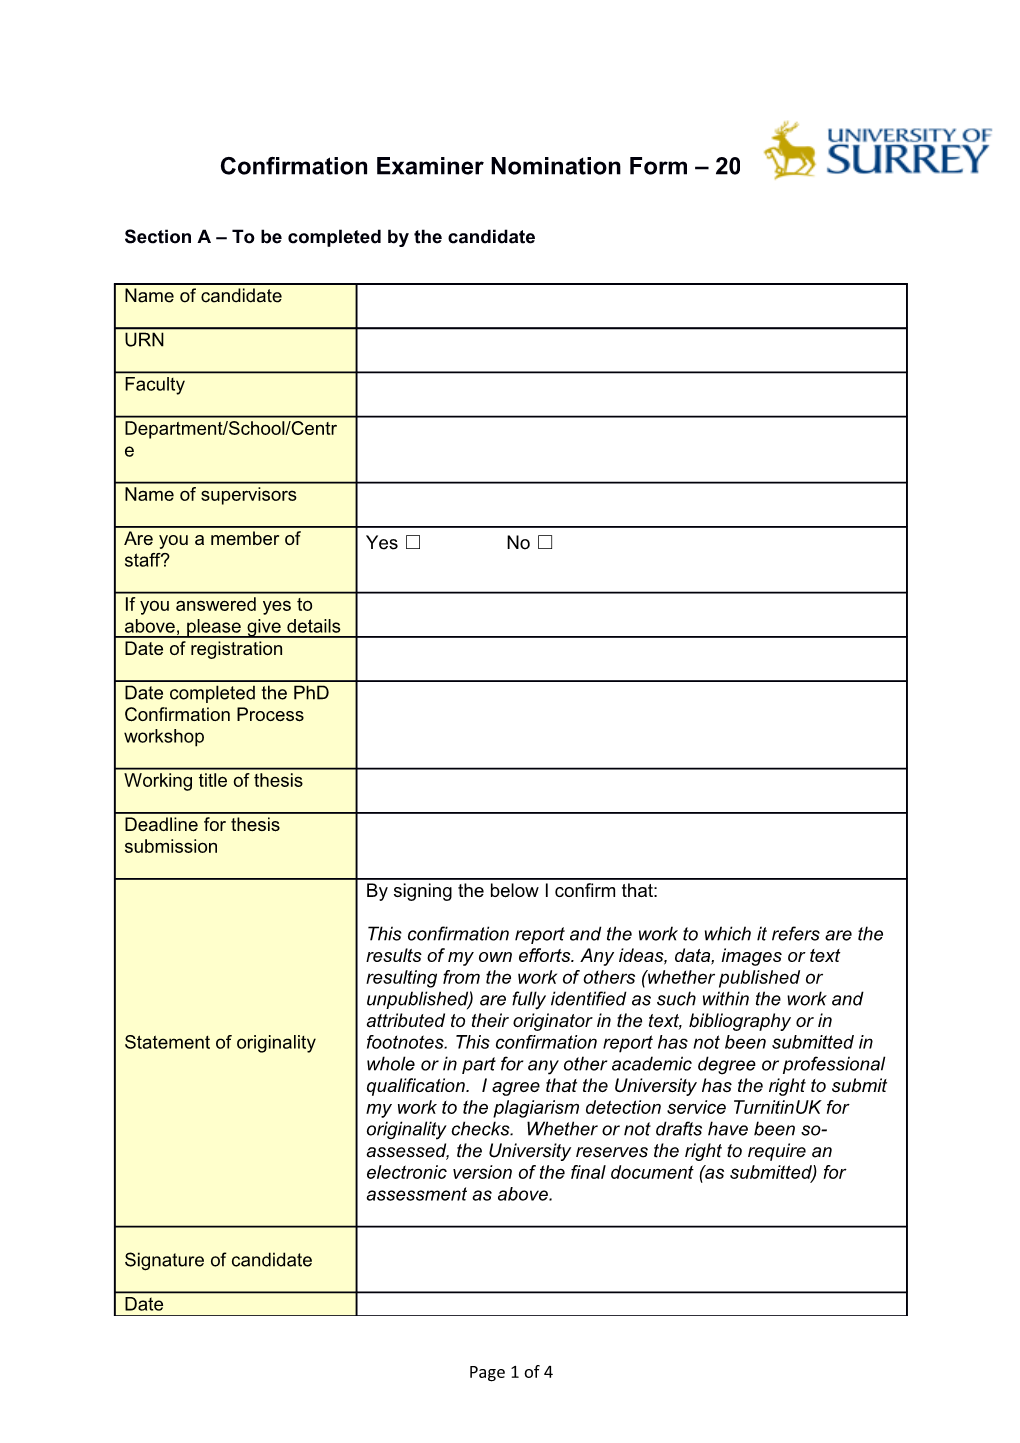 Confirmation Examiner Nomination Form 2017/18